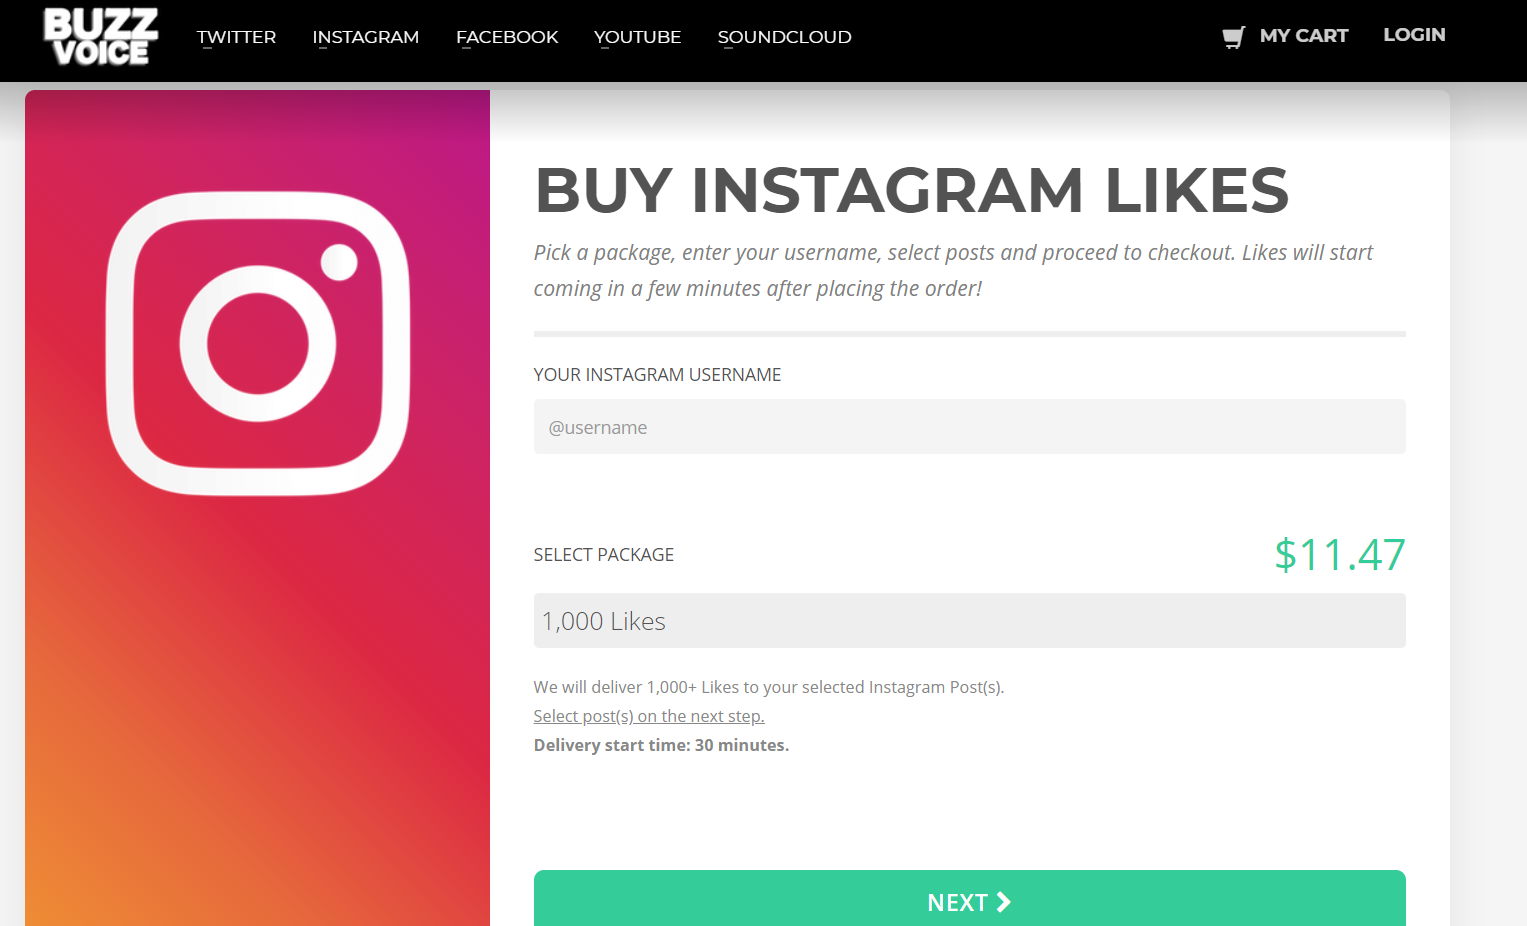 Buy Instagram Likes from BuzzVoice